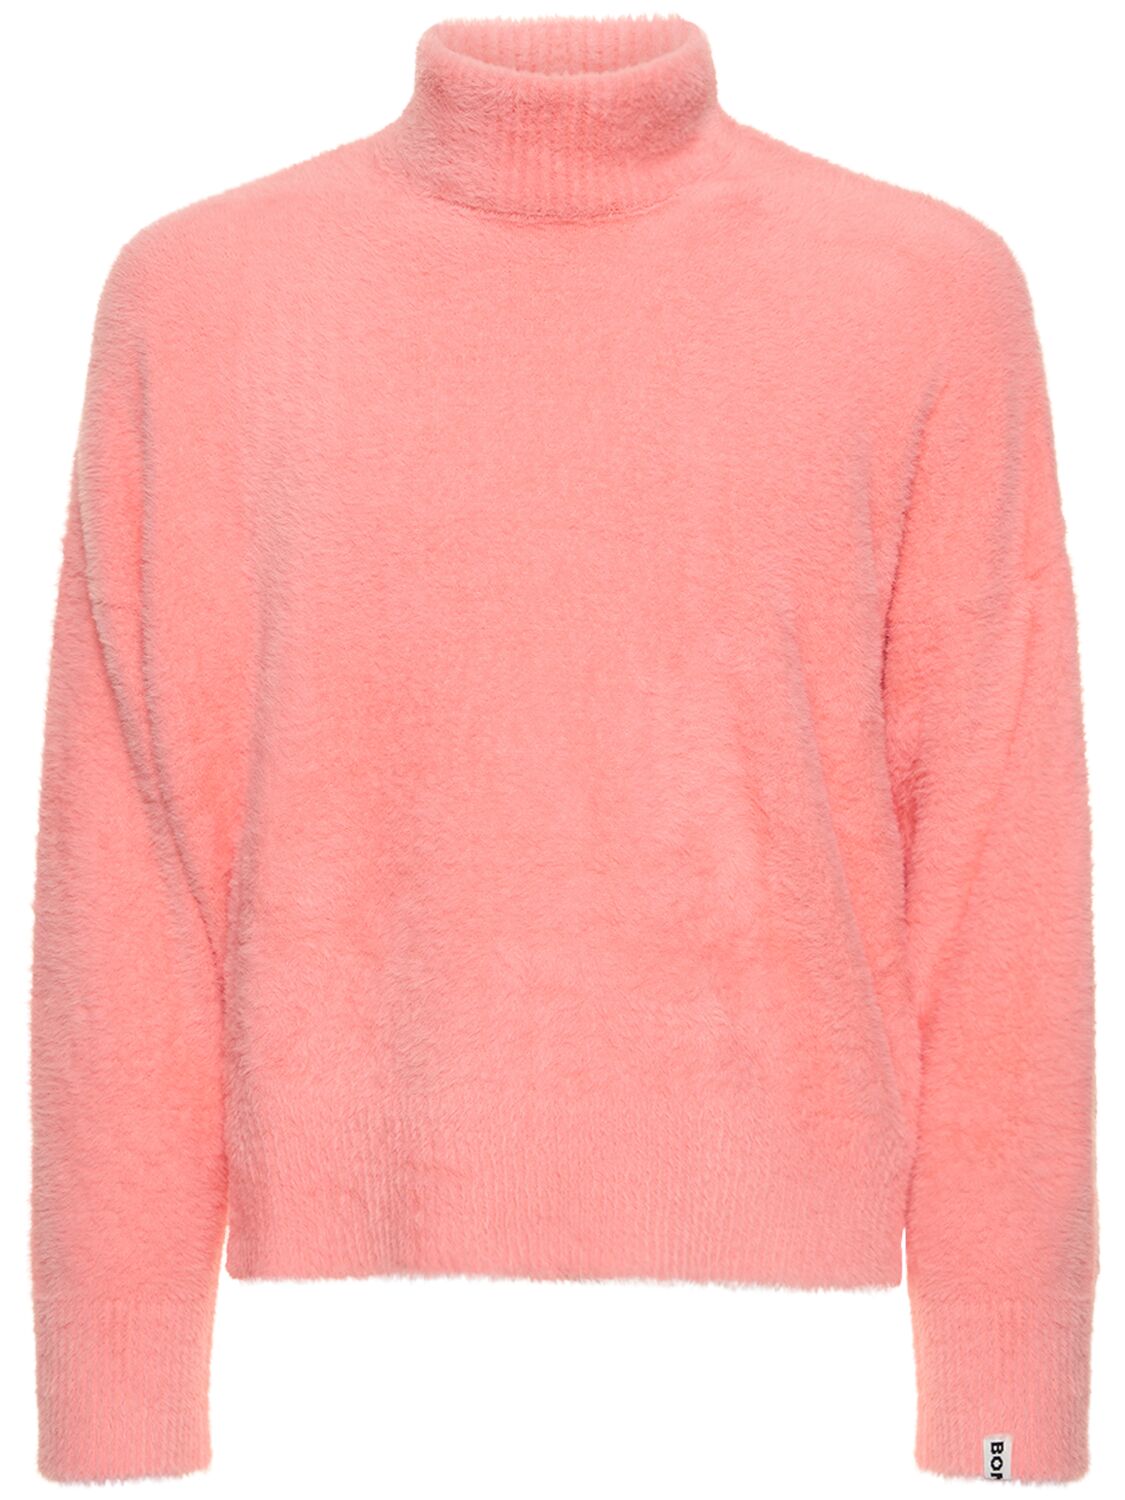 Image of Crop Oversize Knit Turtleneck Sweater